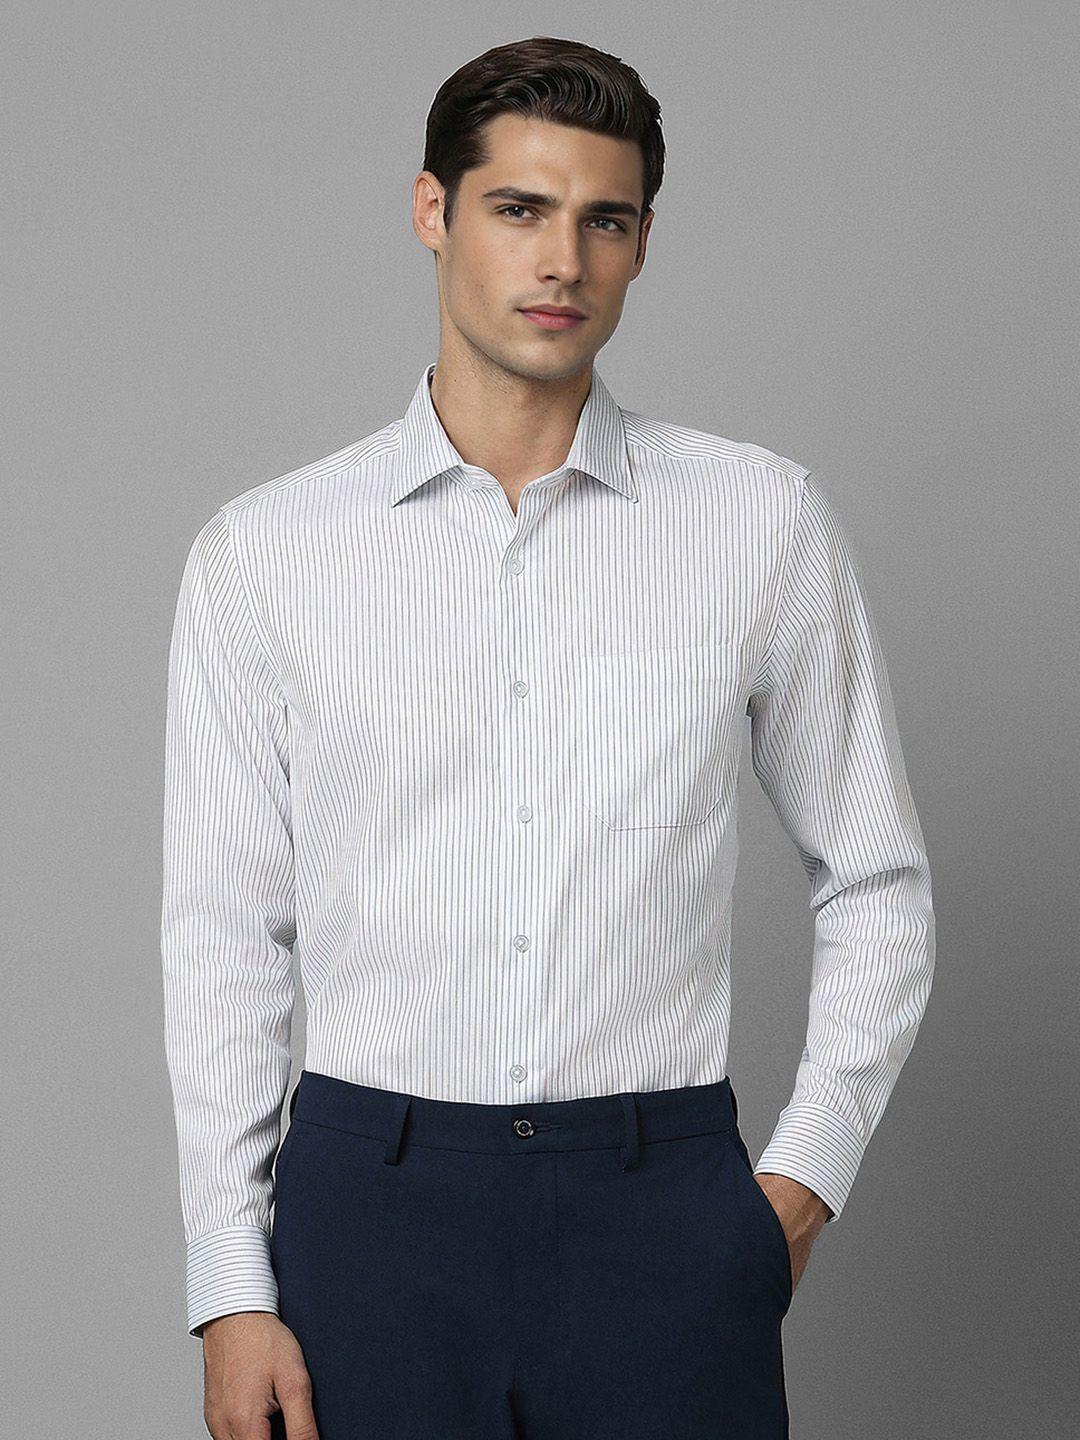 louis philippe vertical stripes spread collar cotton regular fit formal shirt